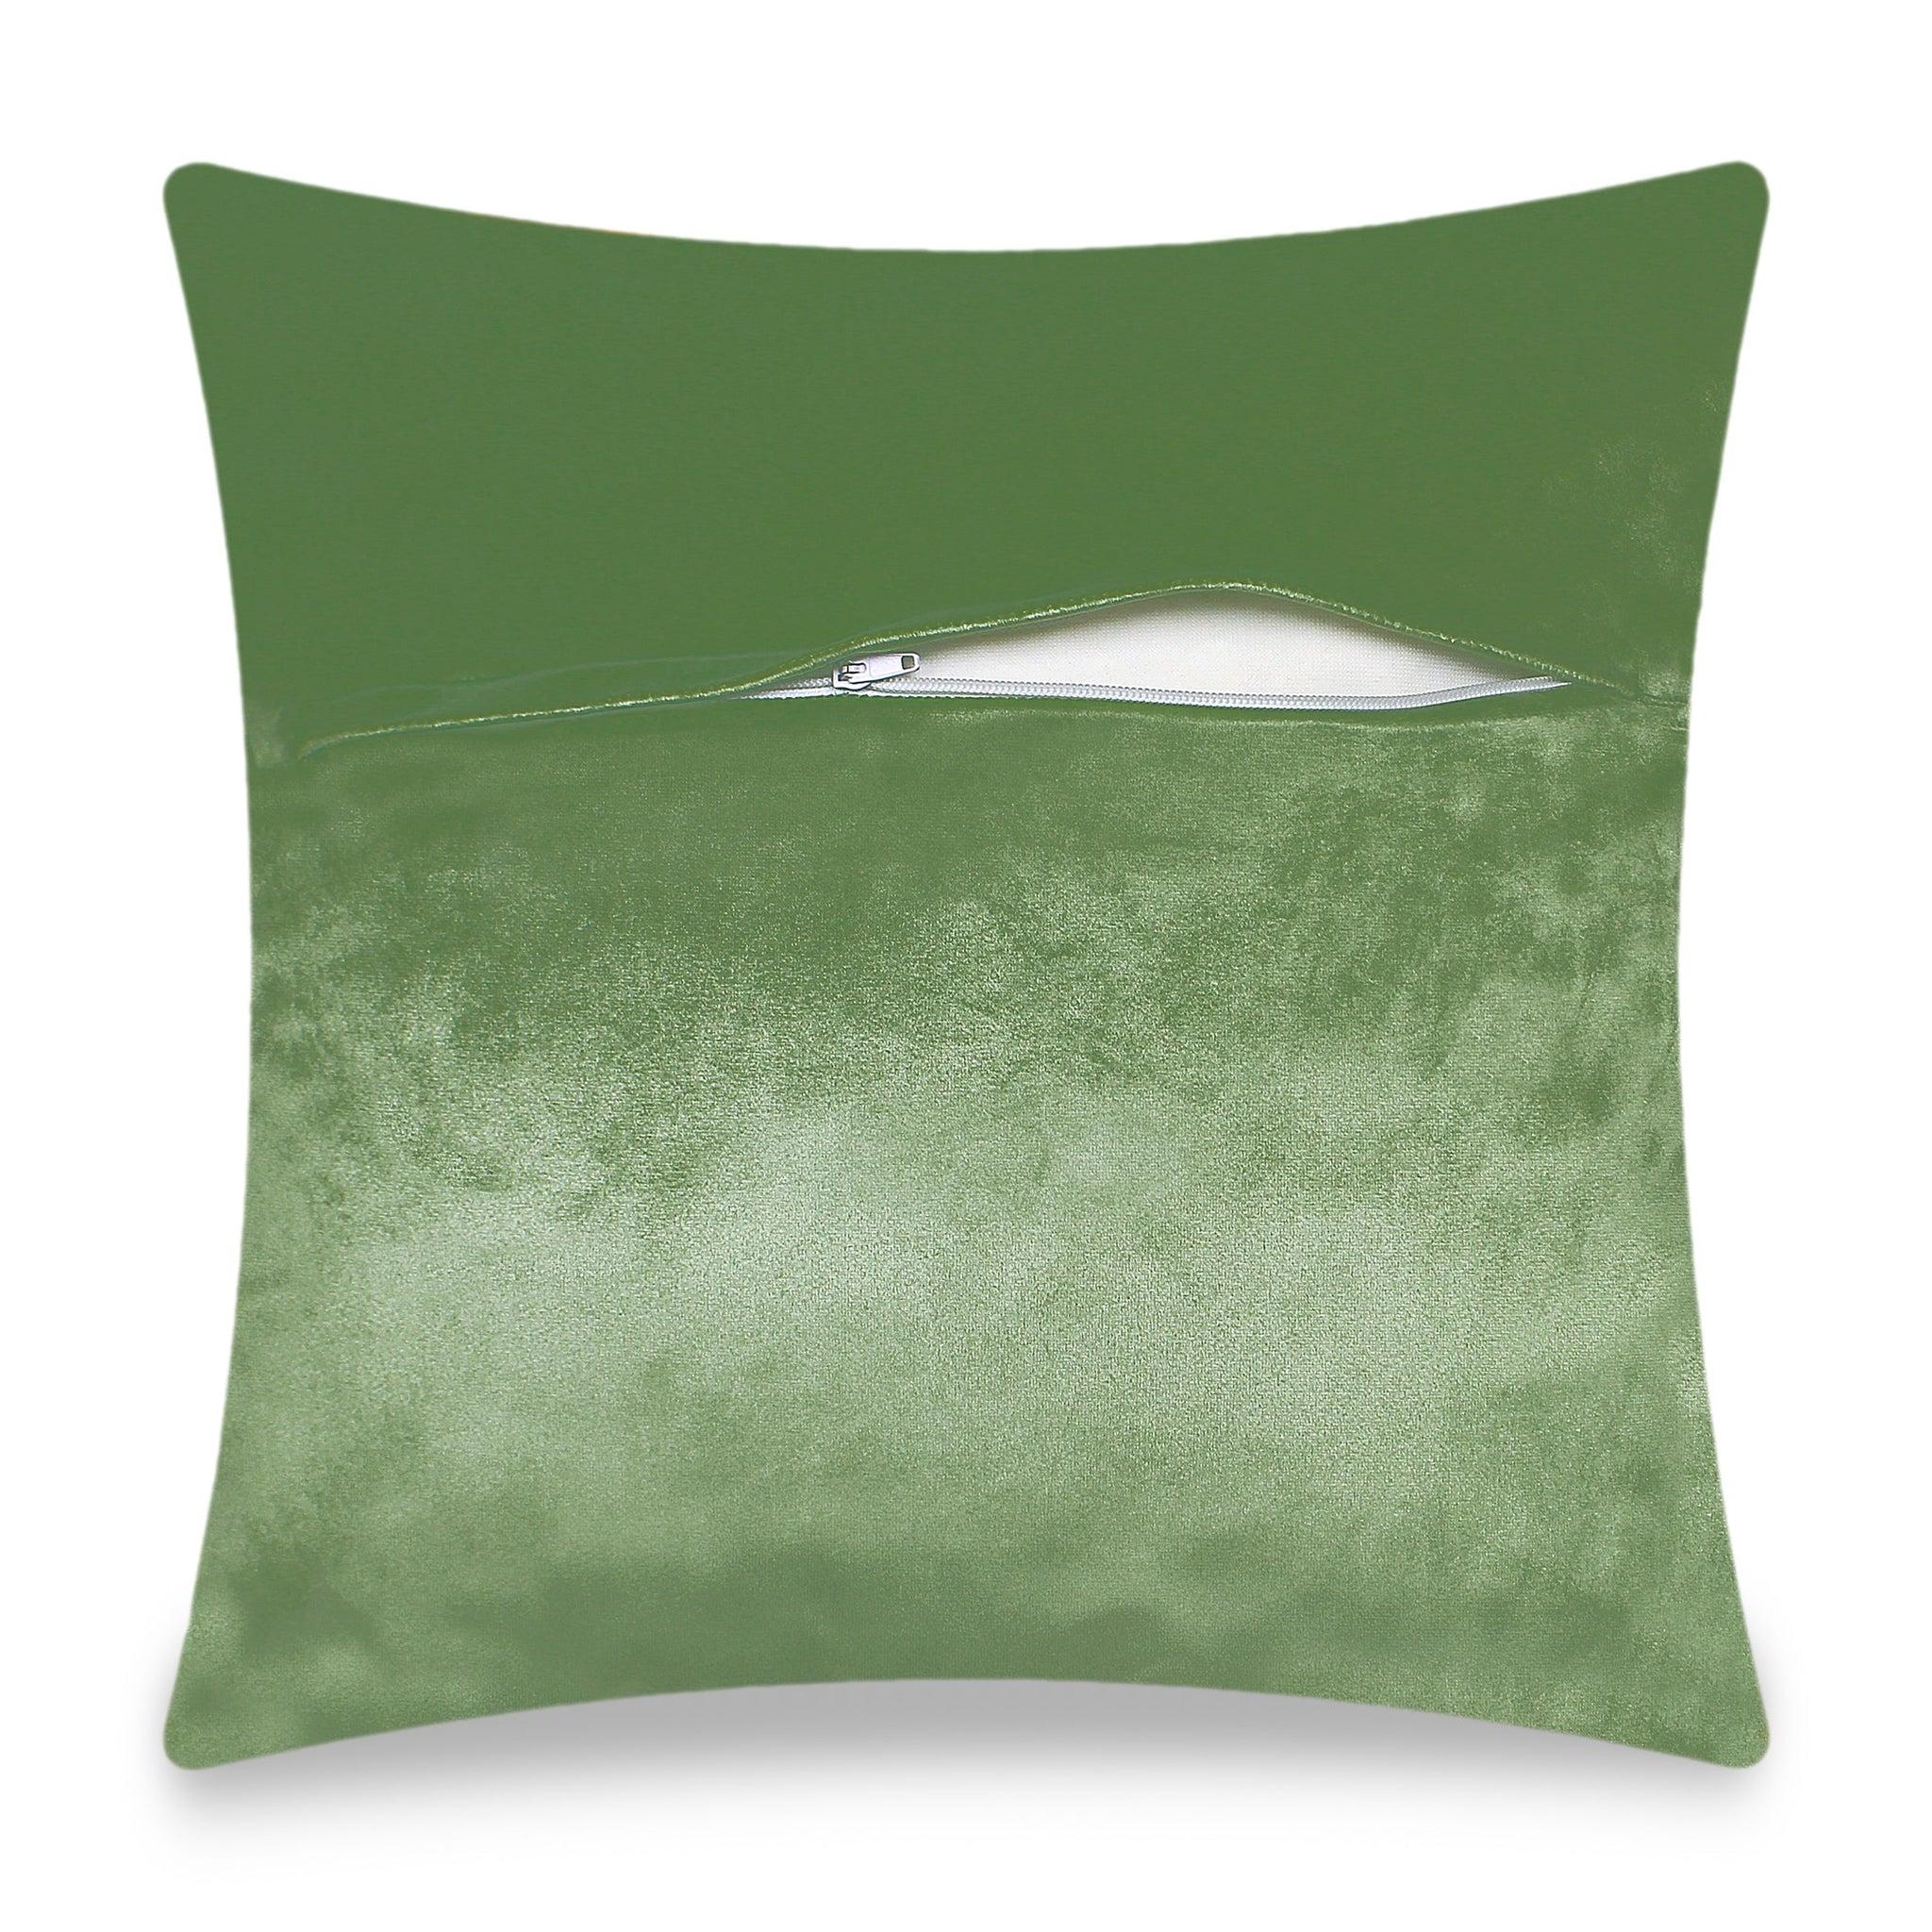 Velvet Cushion Cover Vincent Van Gogh's Irises Paint Decorative Pillow Cover Home Decor Throw Pillow for Sofa 45x45 cm 18x18 In